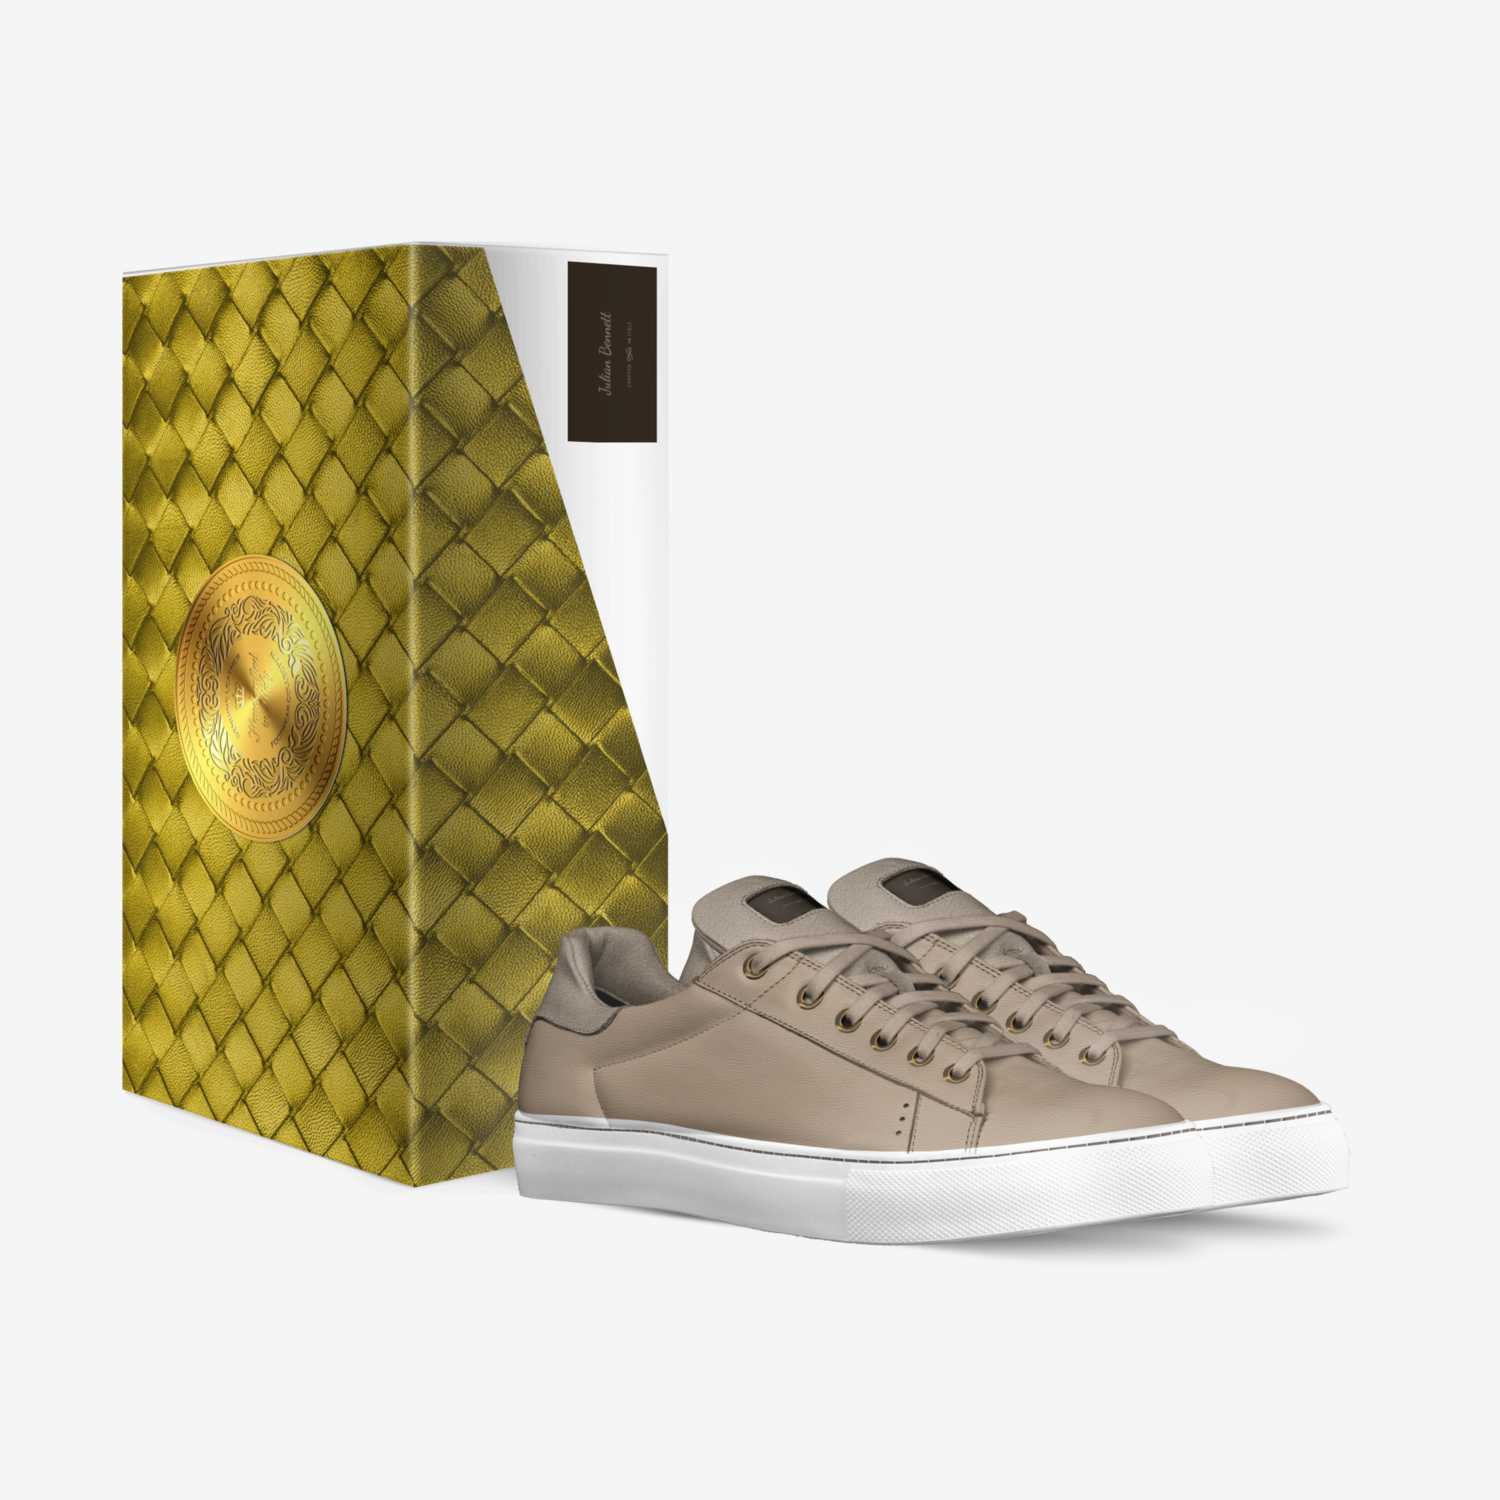 Julian Bennett custom made in Italy shoes by Julian Bennett | Box view